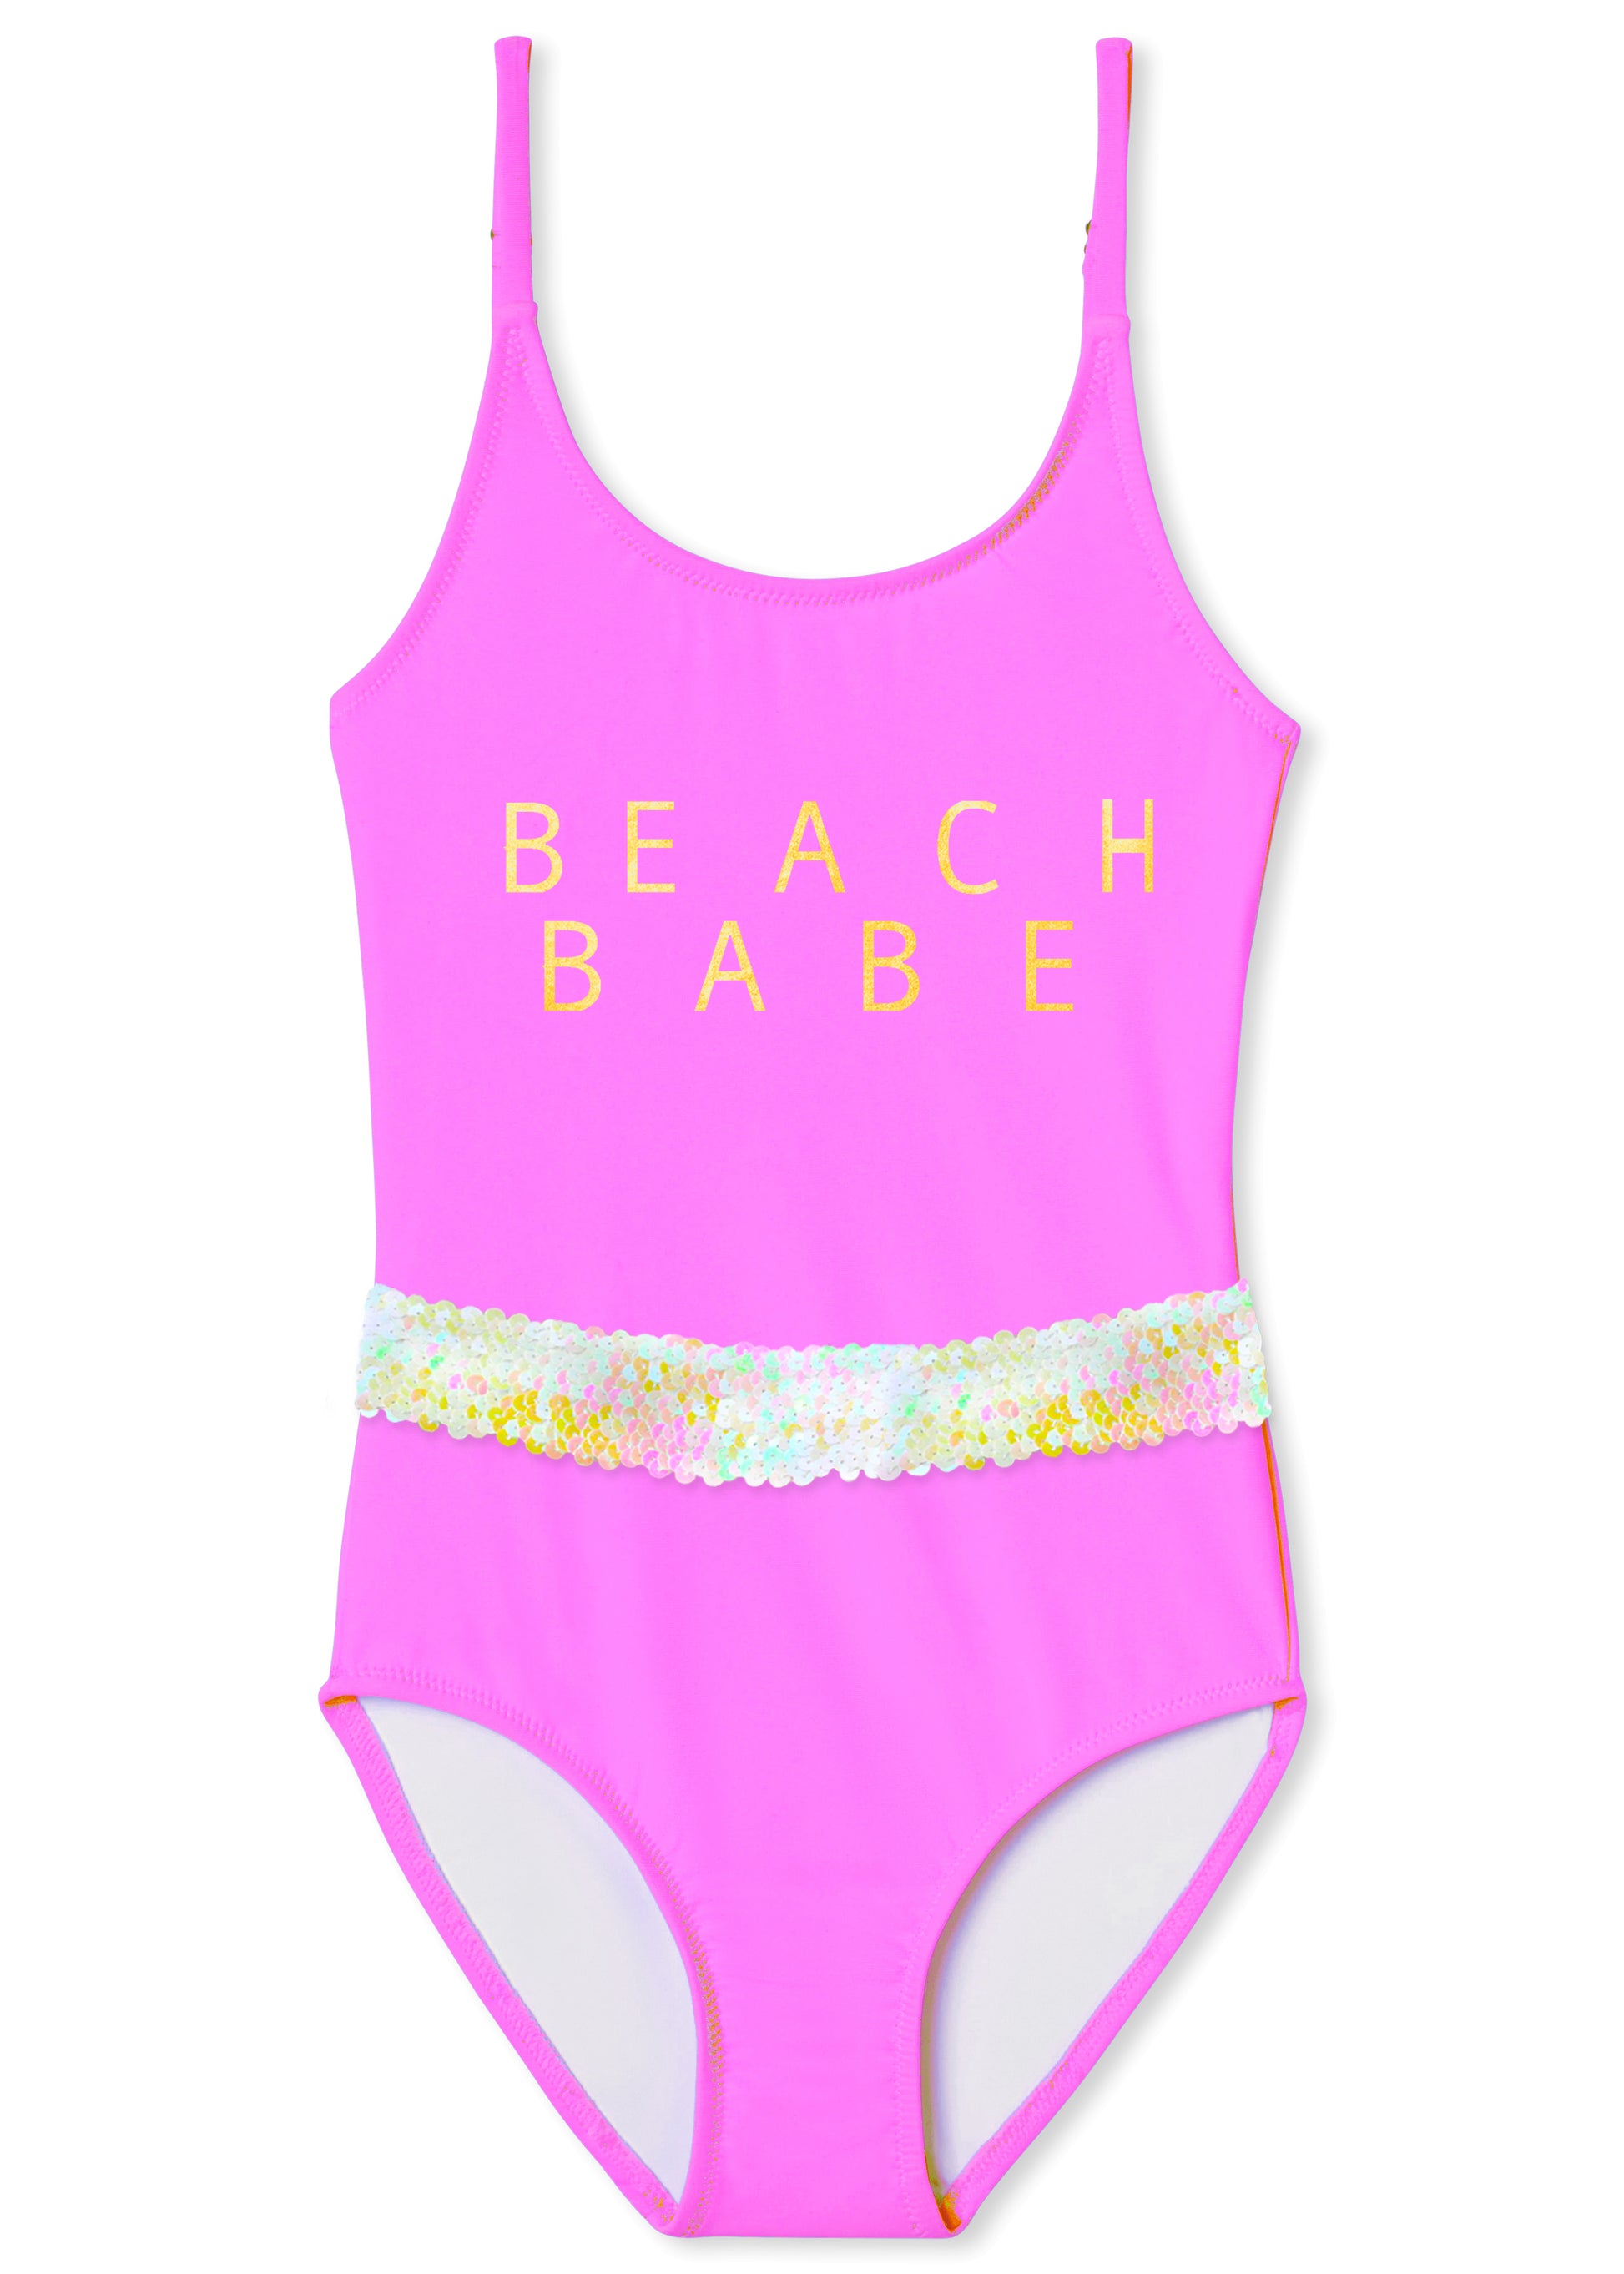 beachwear for girls, pink bathing suit for girls